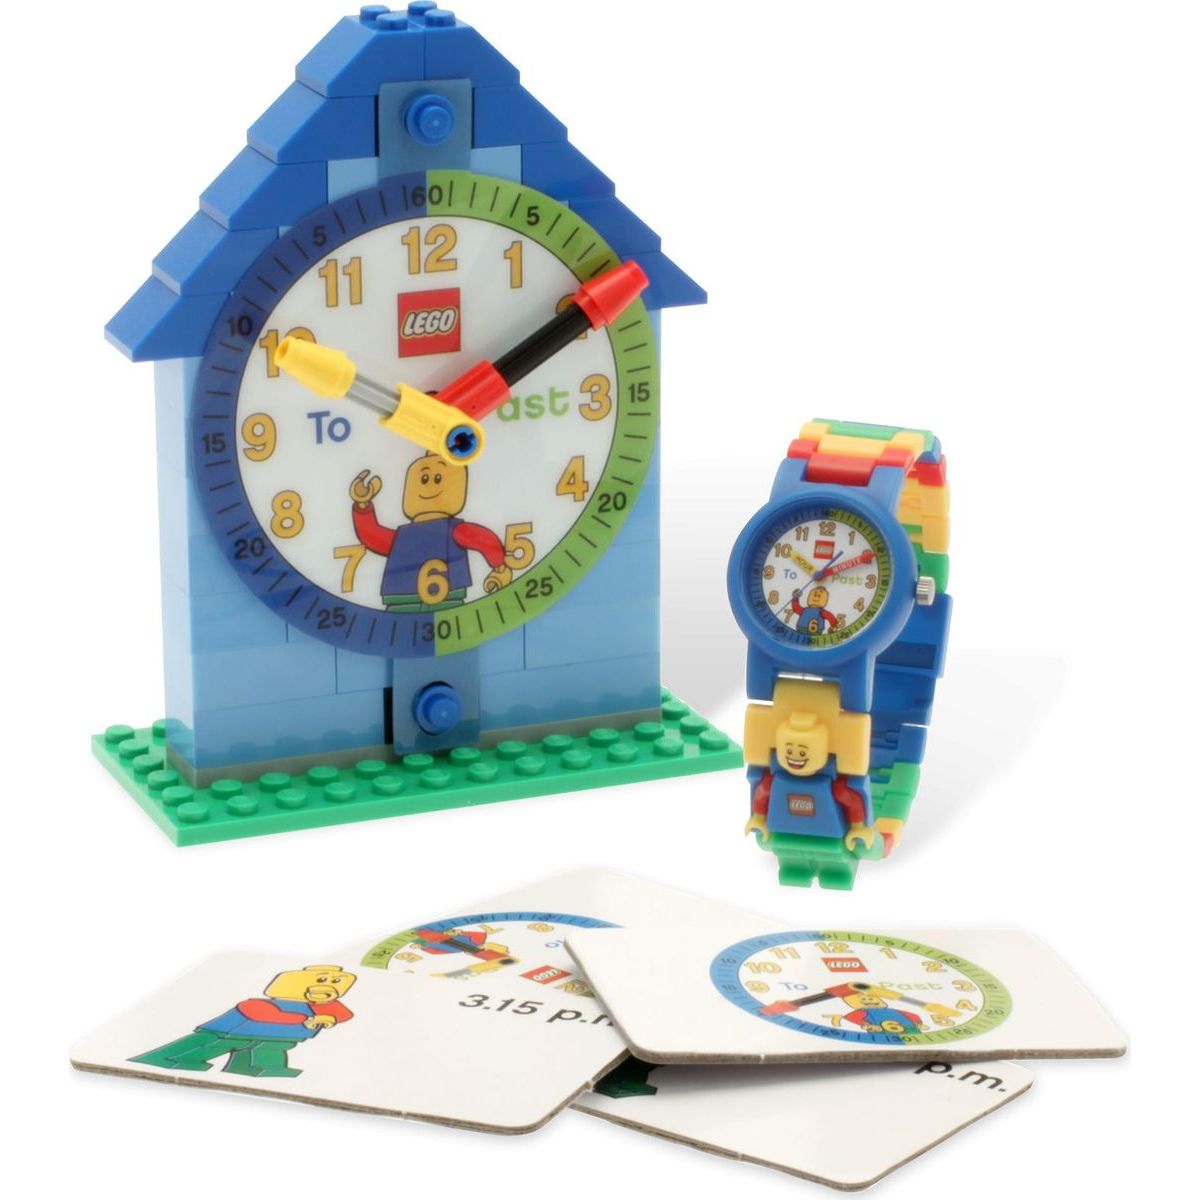 LEGO Time Teacher Výuková stavebnice hodin a hodinky modré